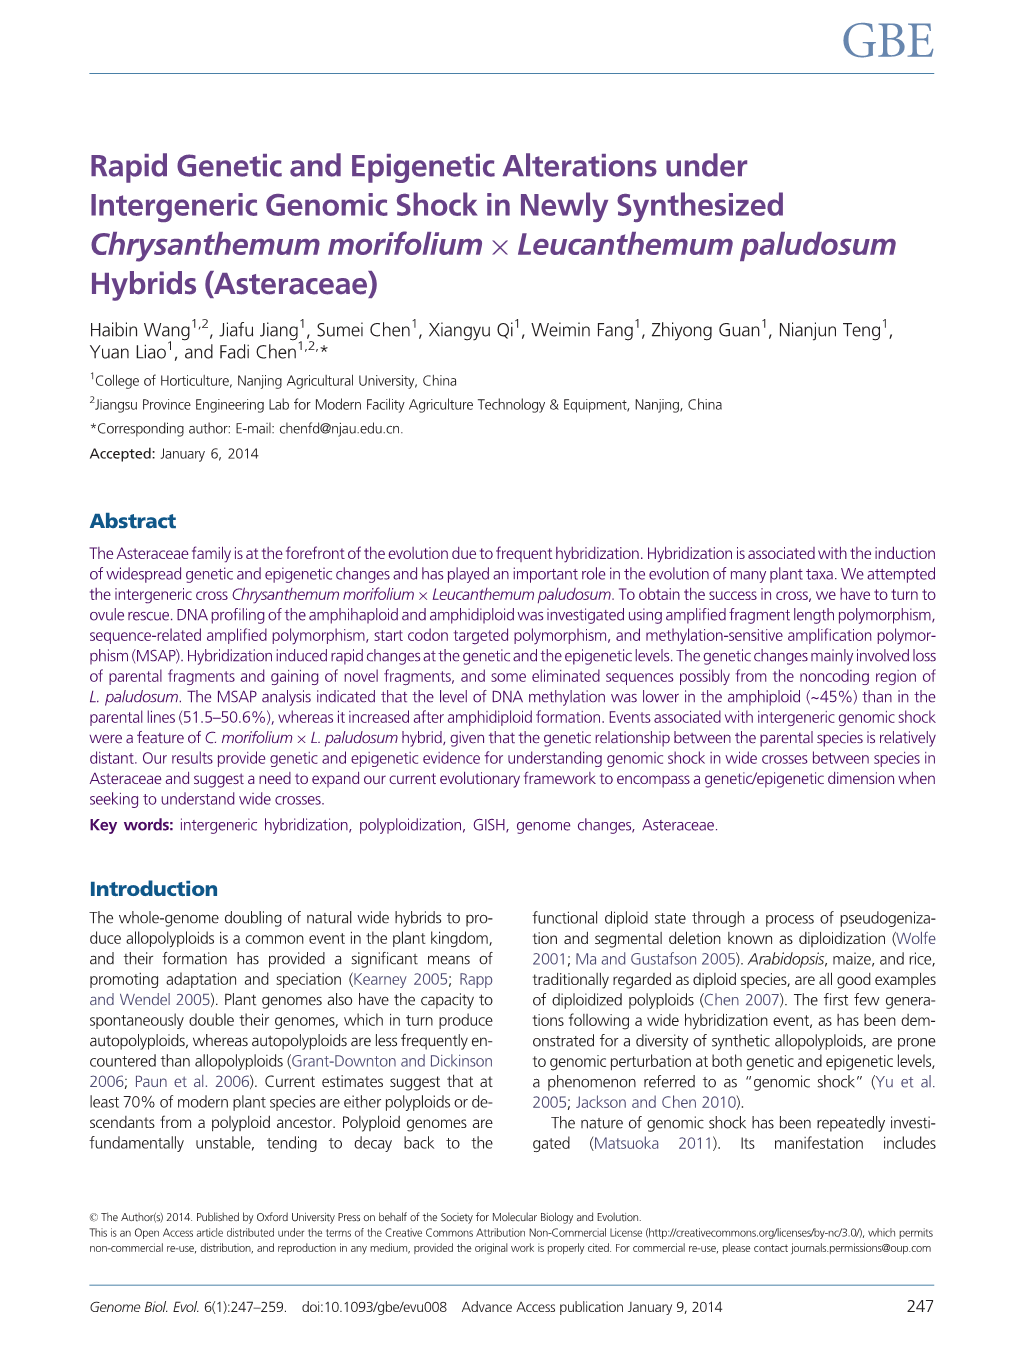 Rapid Genetic and Epigenetic Alterations Under Intergeneric Genomic Shock in Newly Synthesized Chrysanthemum Morifolium � Leucanthemum Paludosum Hybrids (Asteraceae)